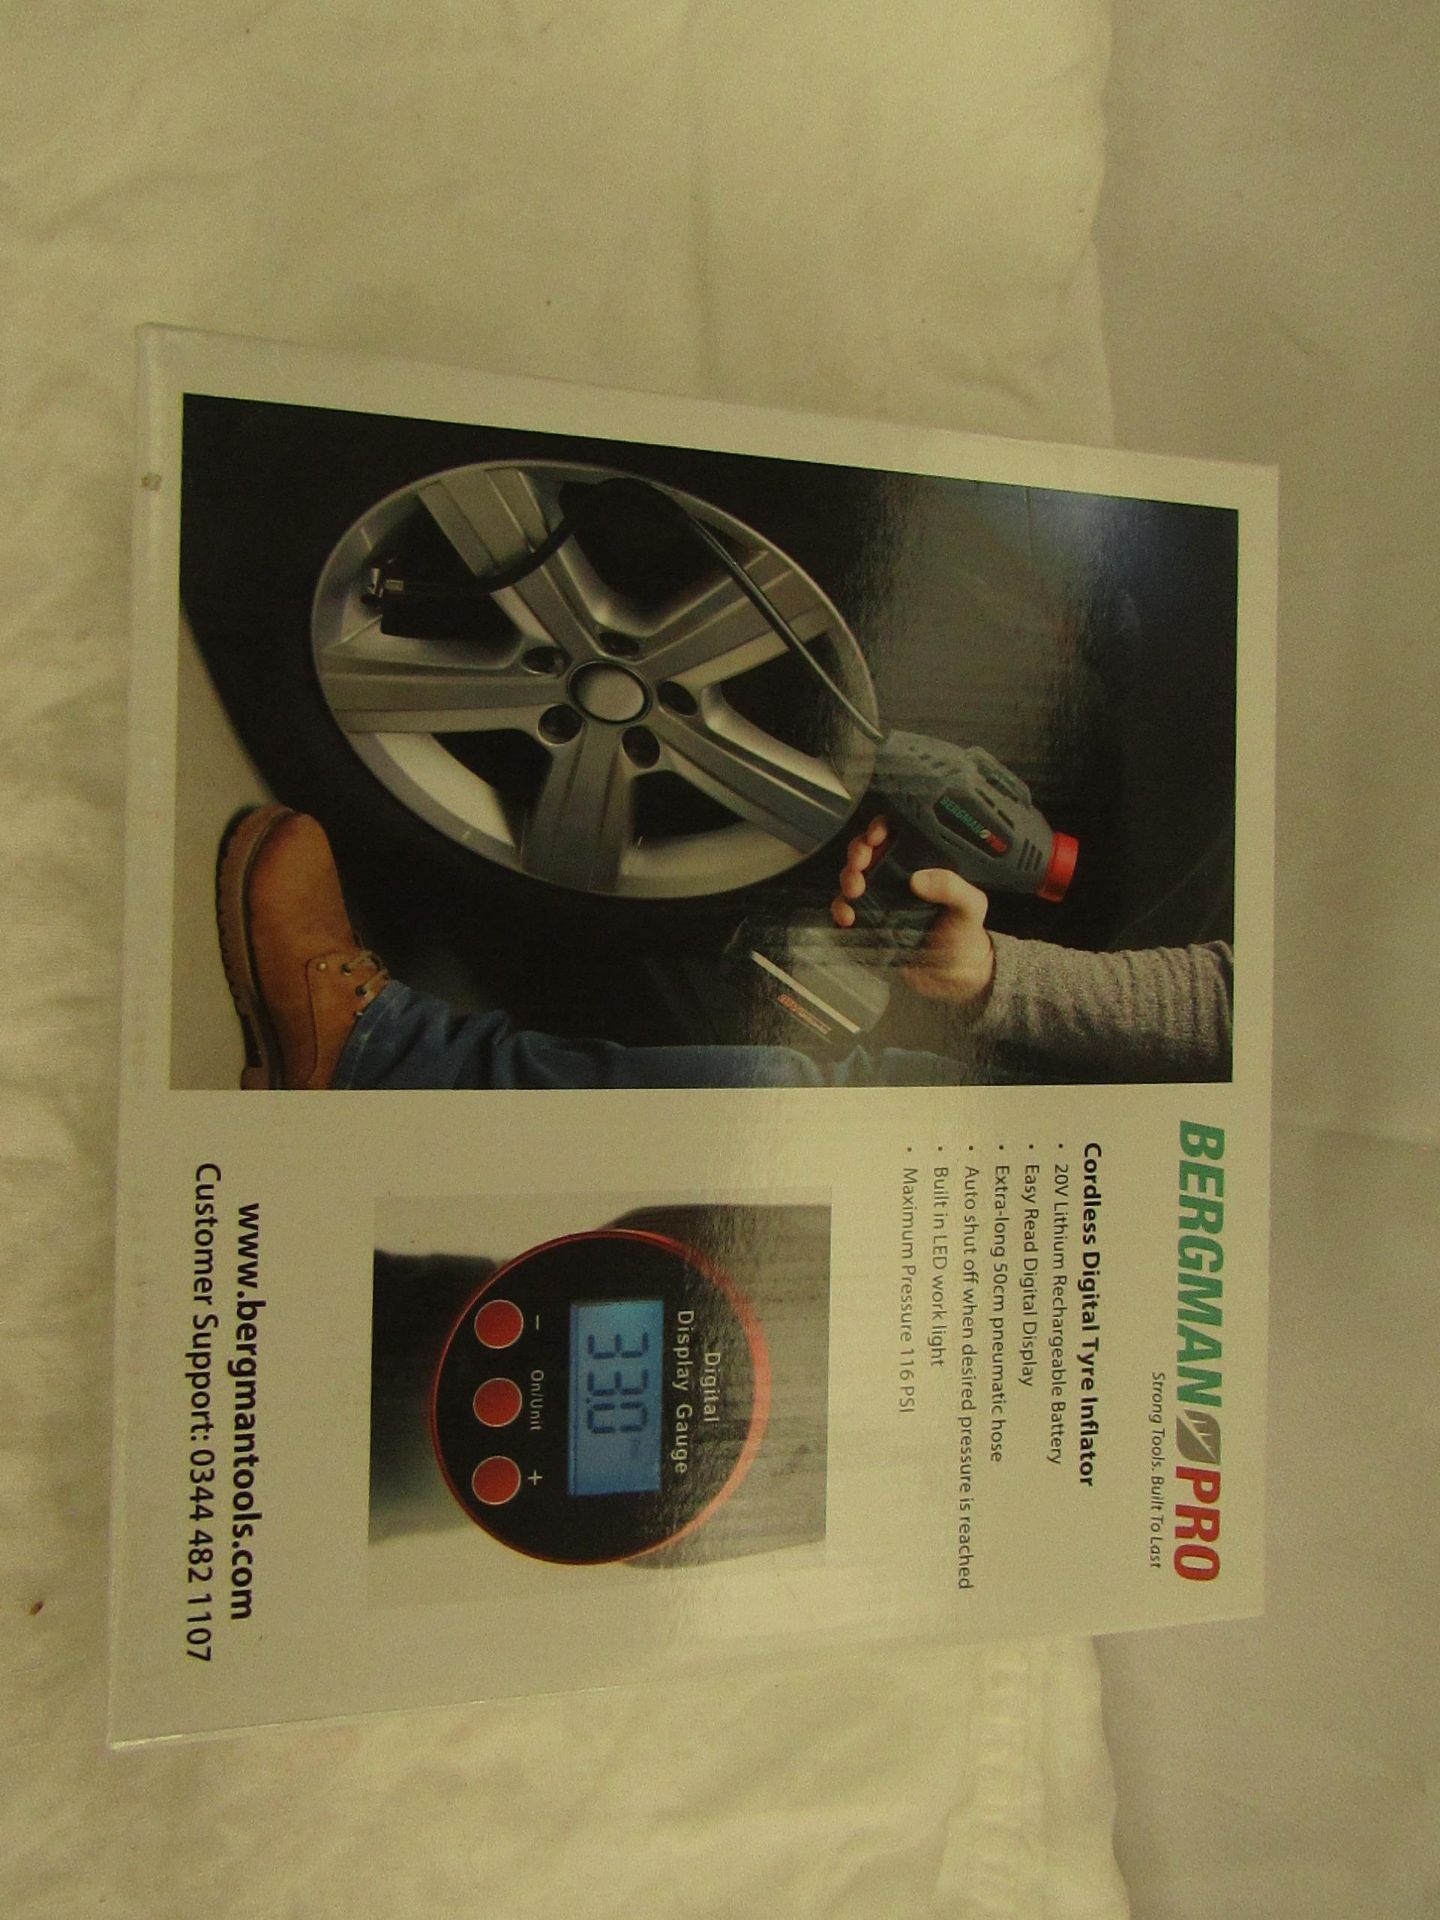 1 x Scotts of Stow BergmanPro® Cordless Digital Tyre Inflator RRP £59.95 SKU SCO-DIR-3262342 TOTAL